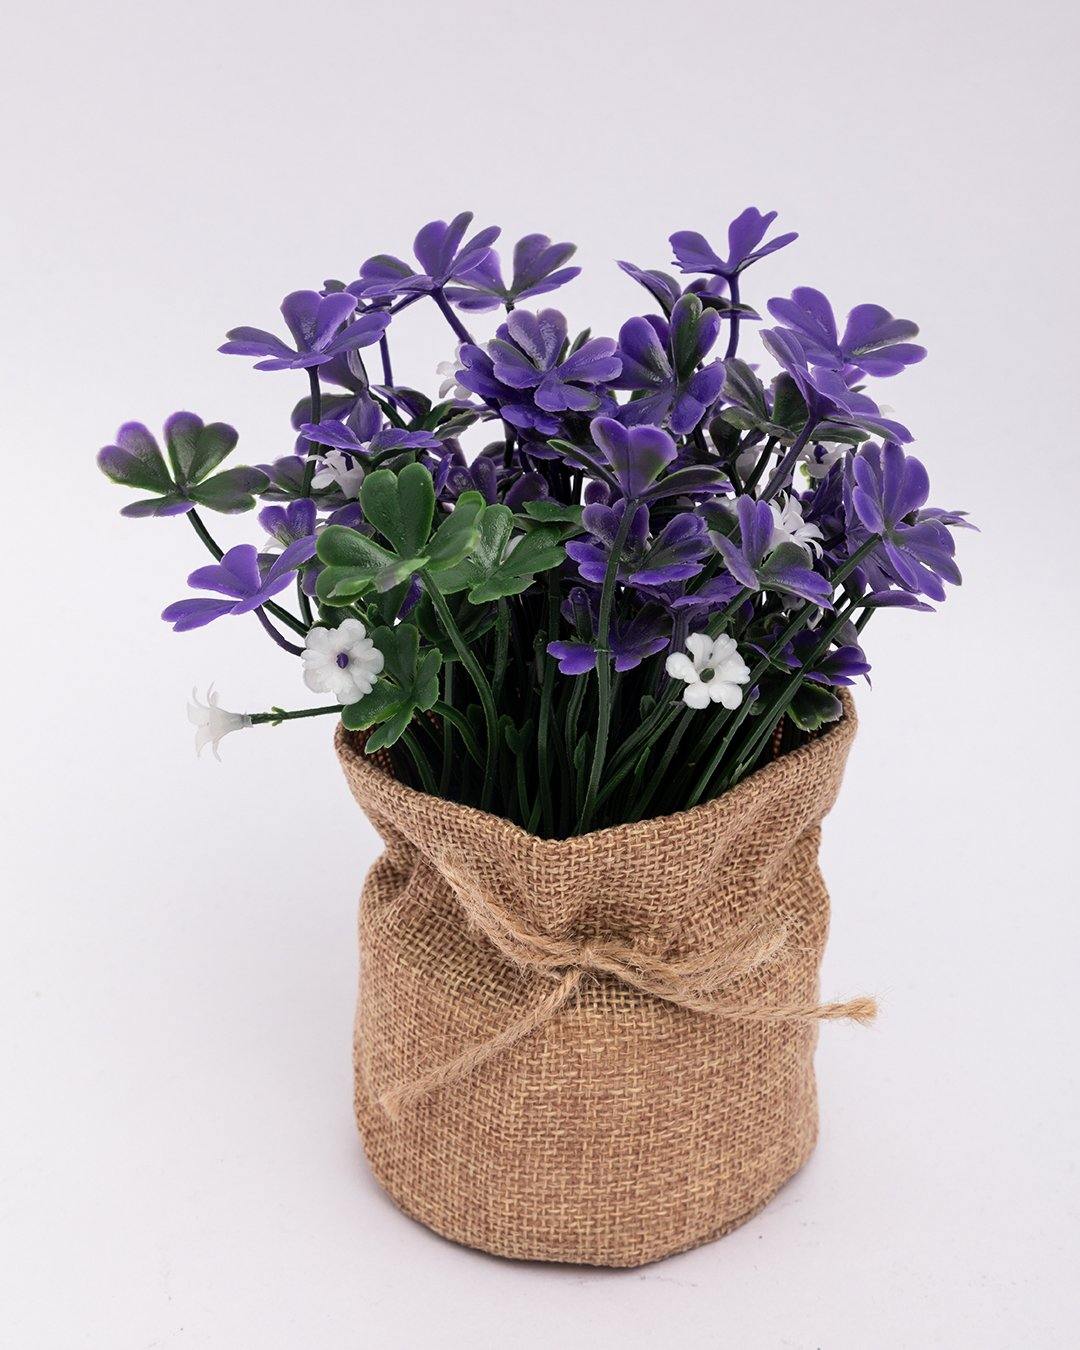 VON CASA Artificial Flower with Jute Sack, Purple, Plastic